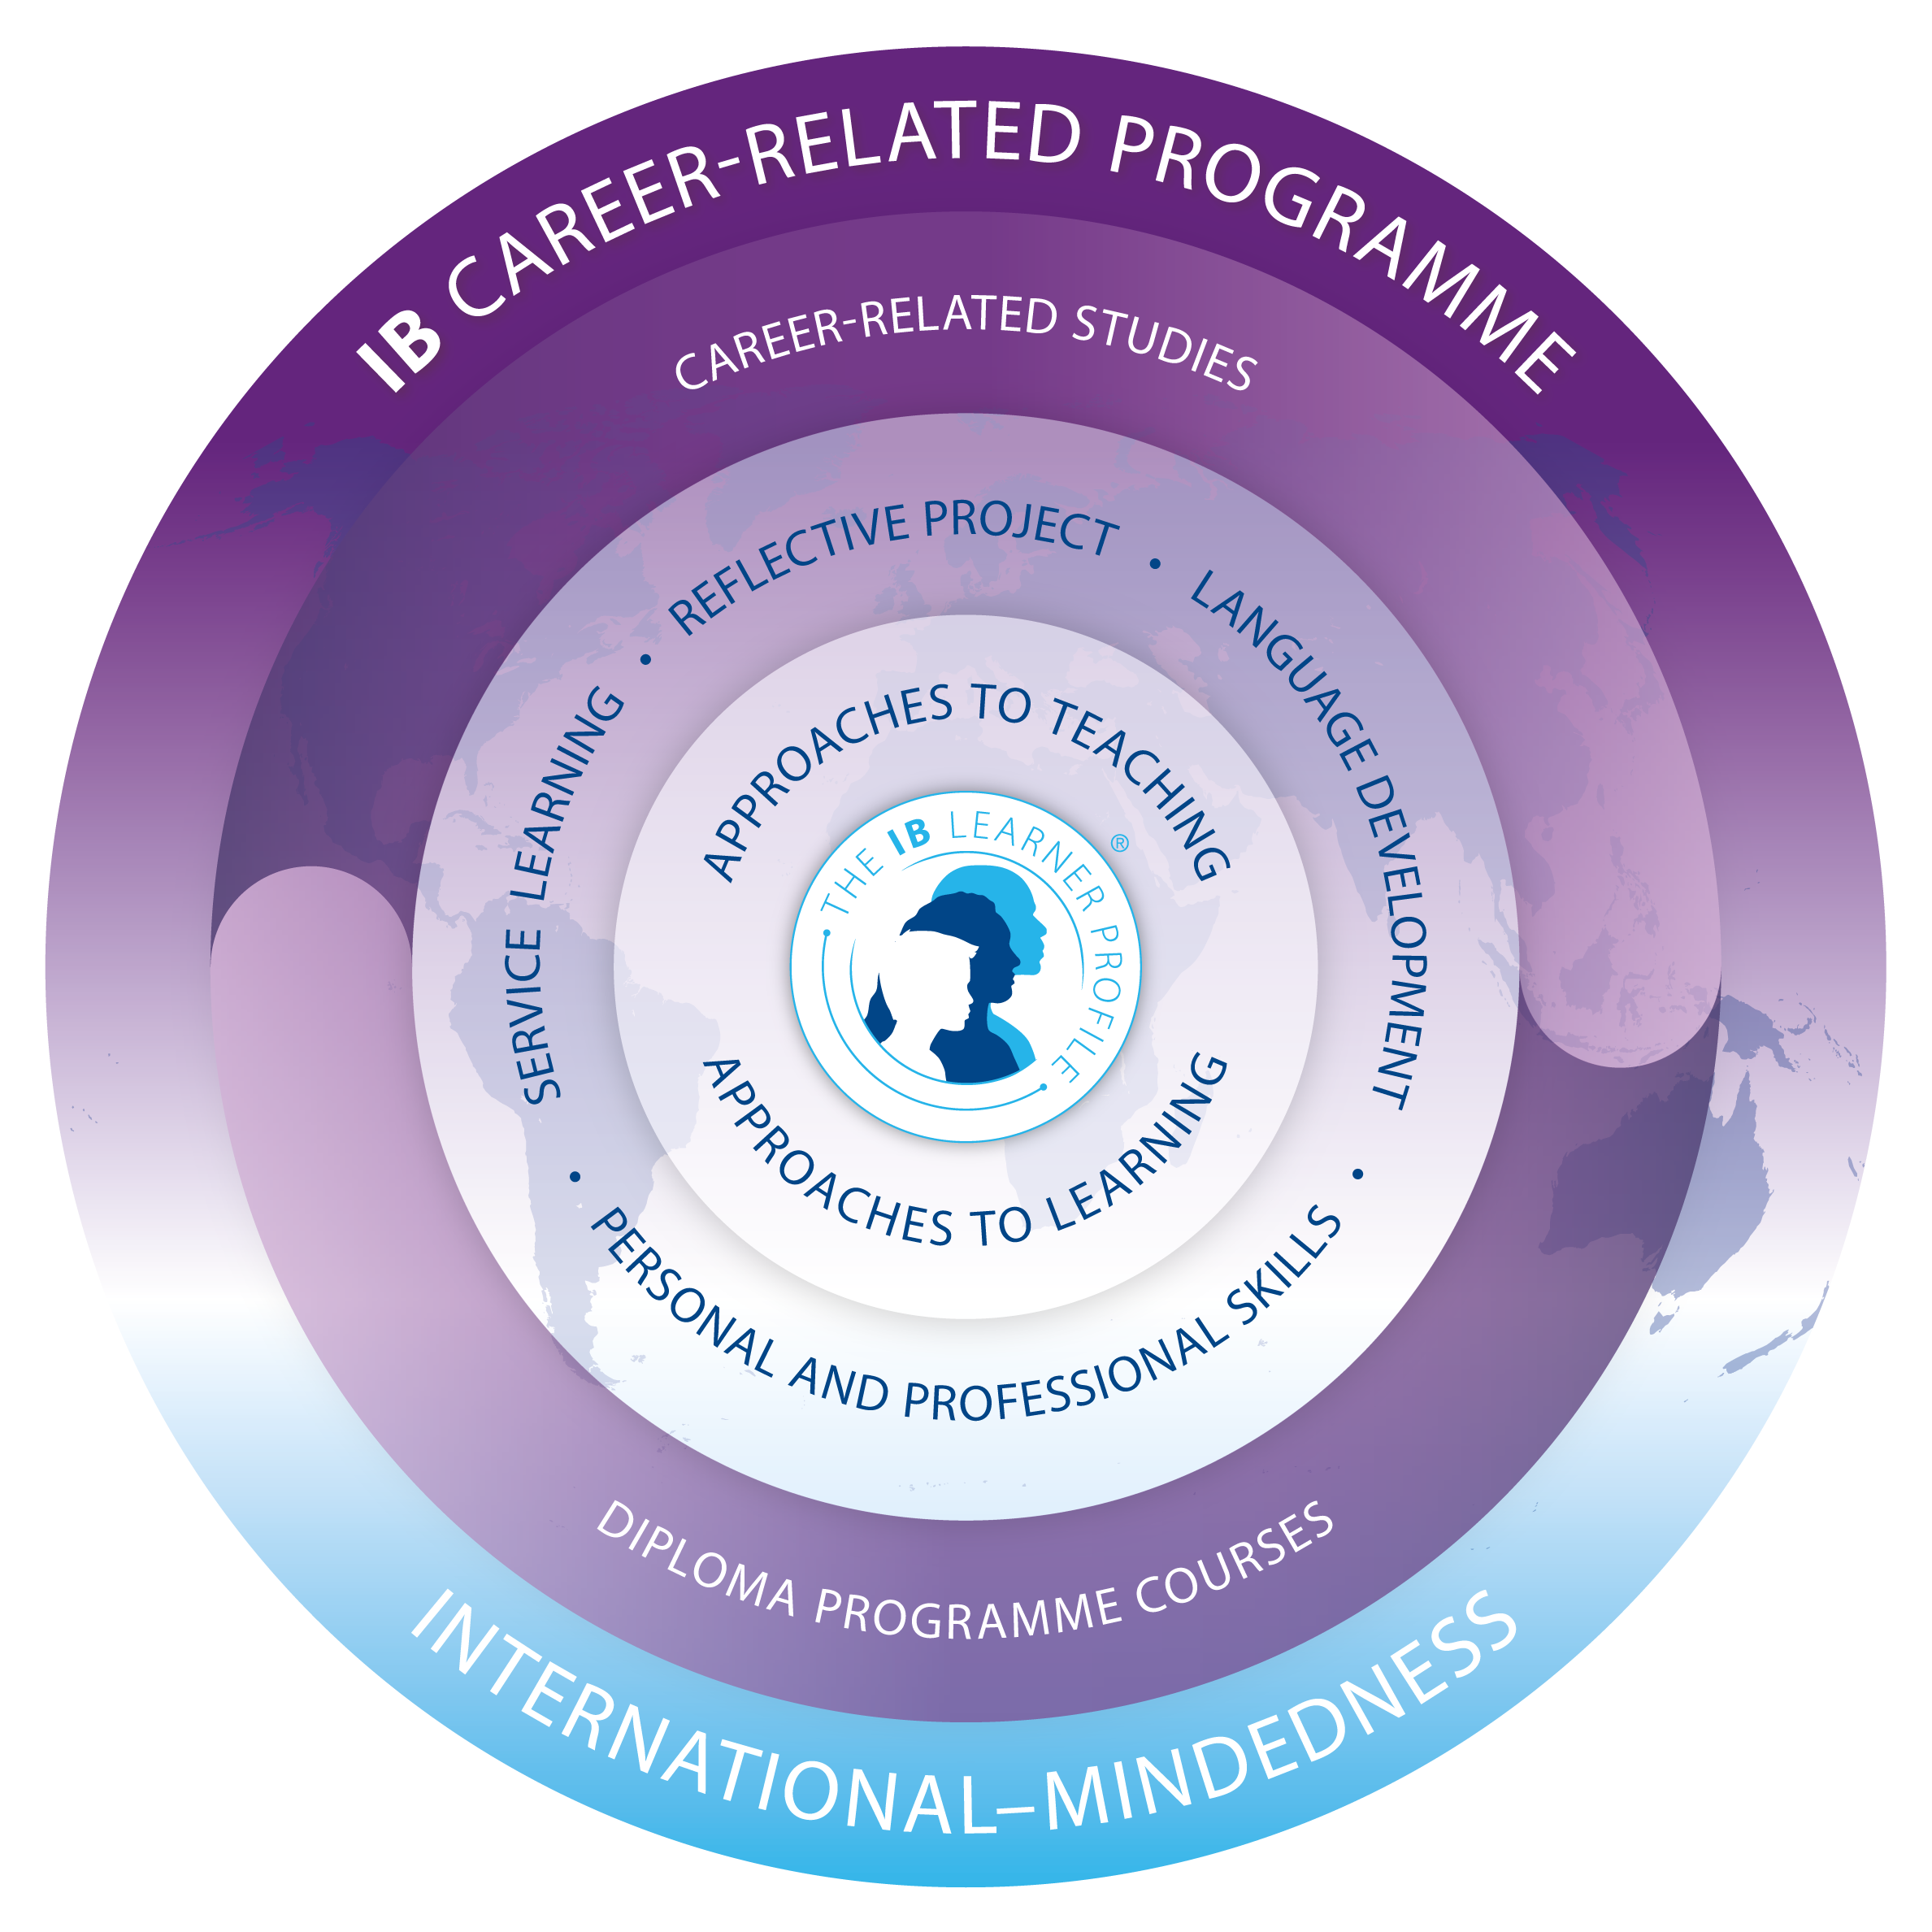 CP programme model